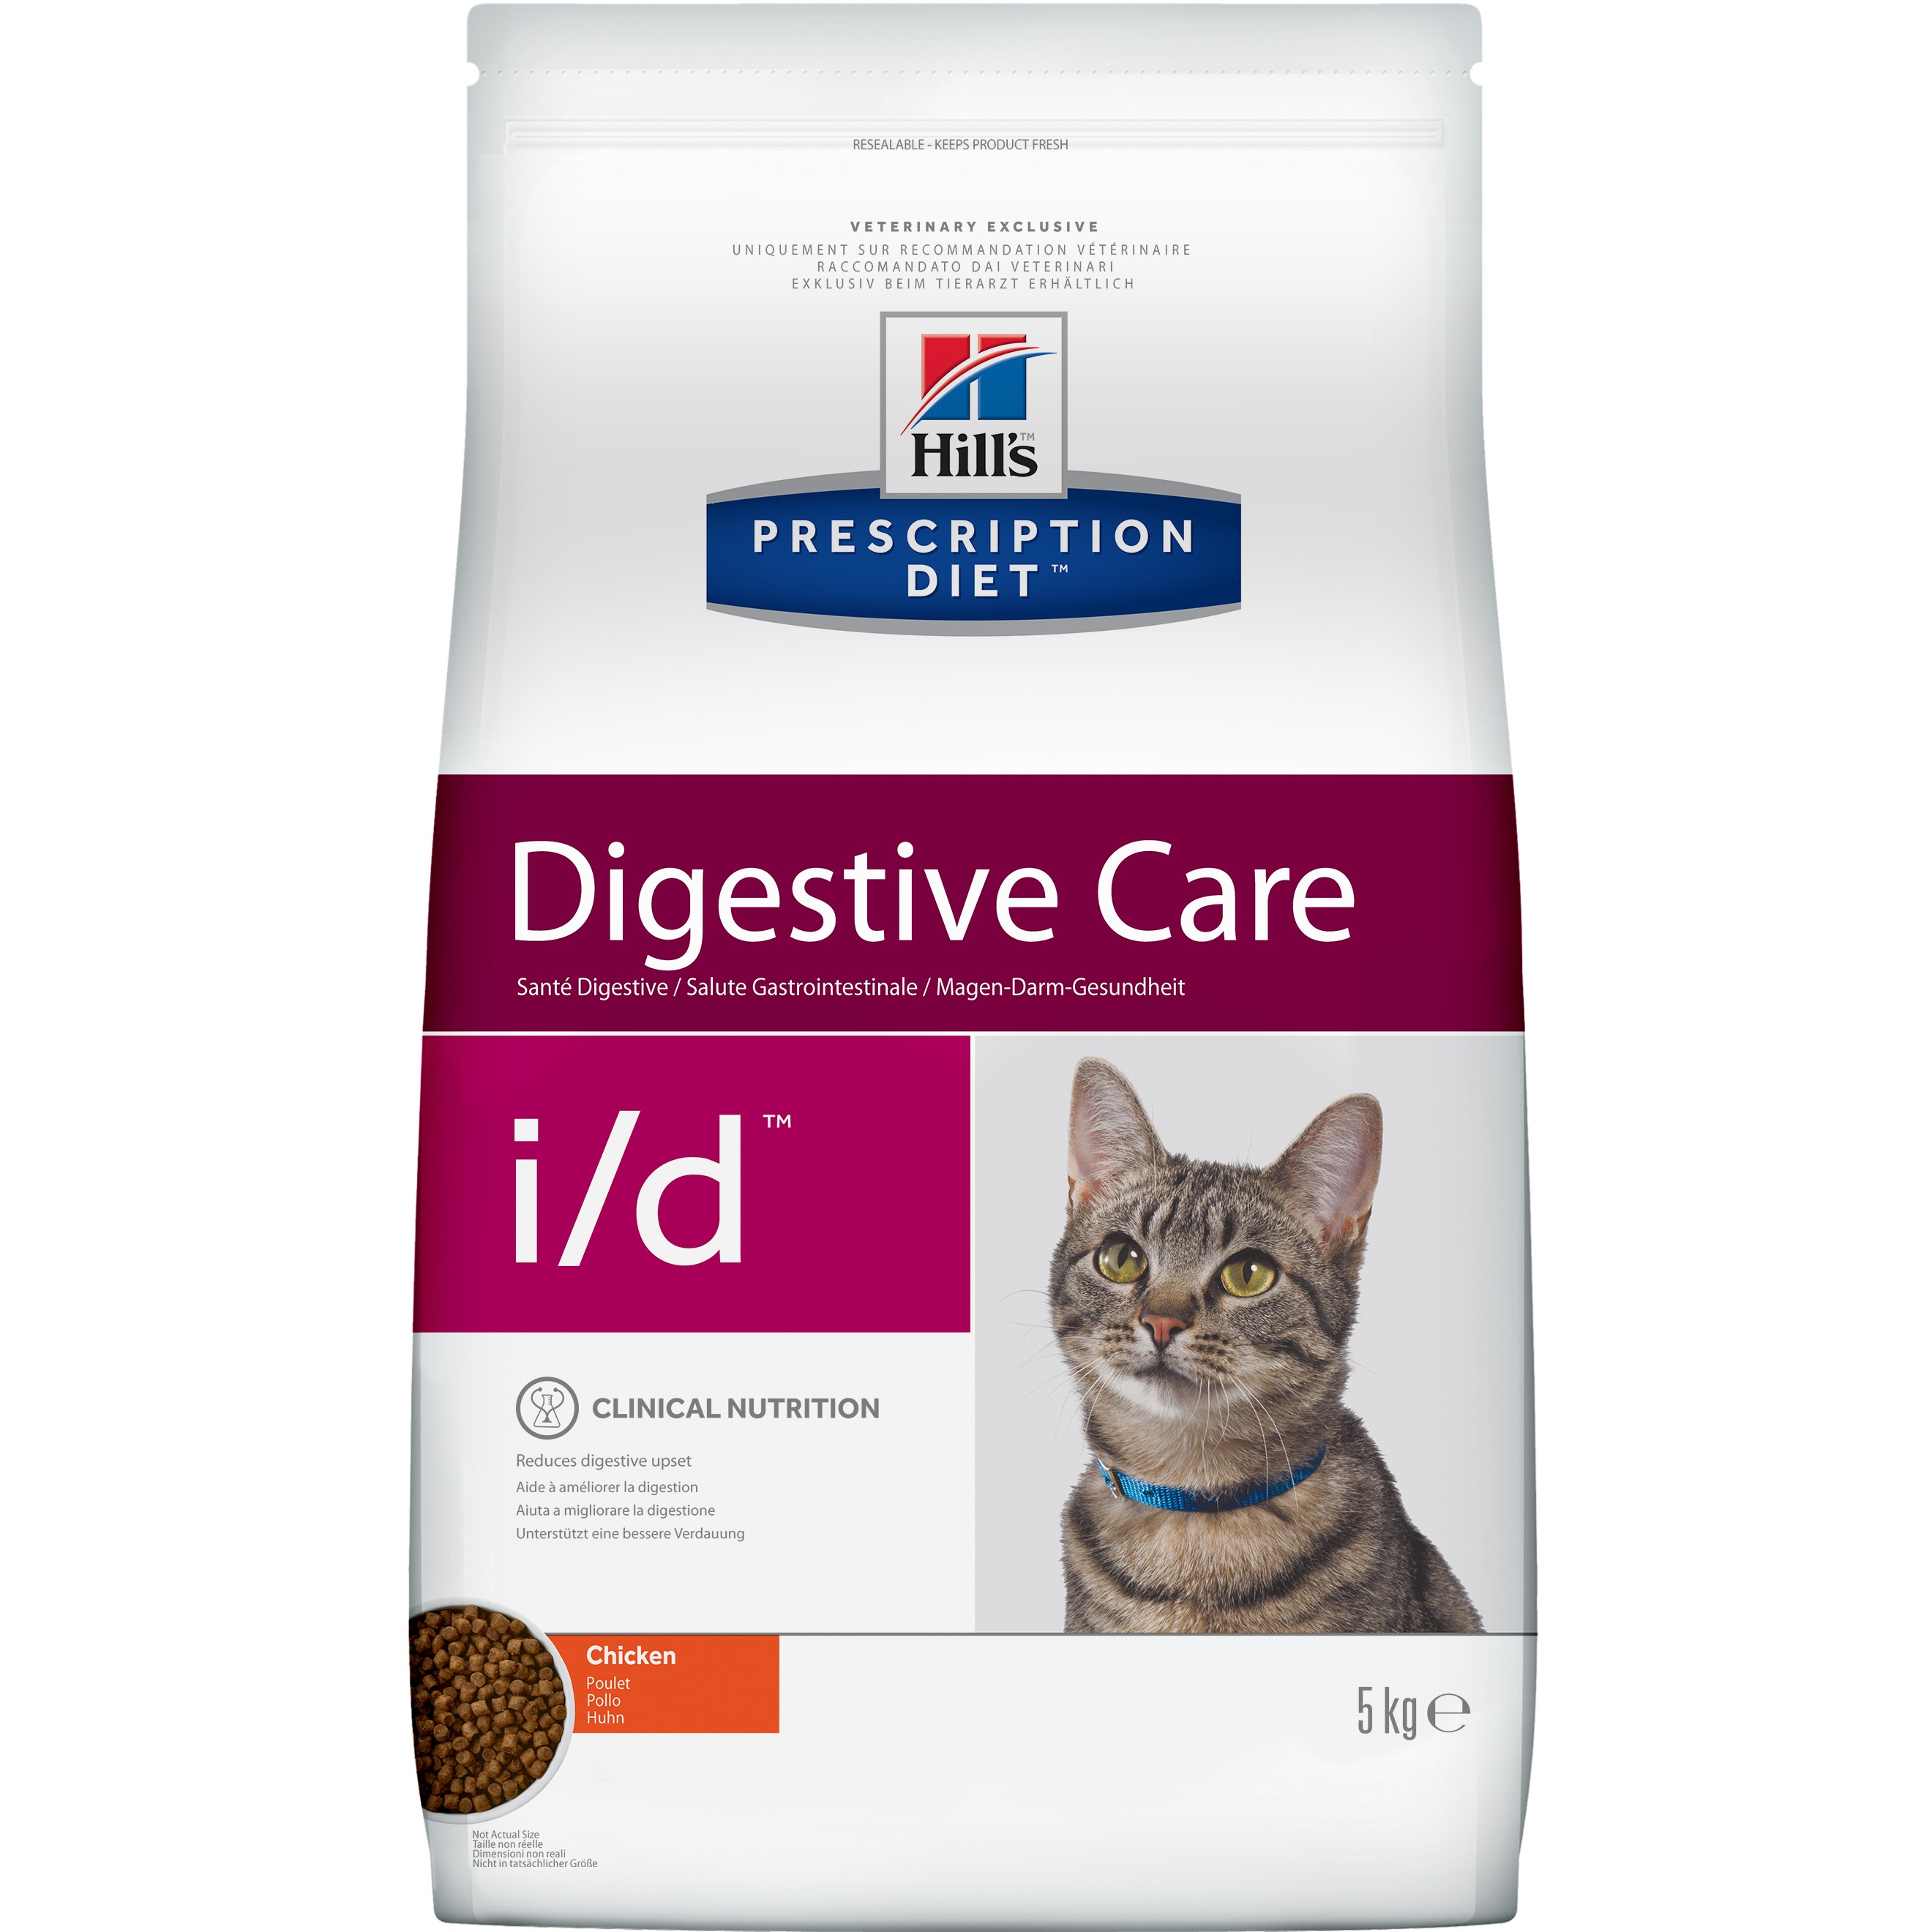 Hill's Prescription Diet i/d Digestive Care сухой корм для кошек, с курицей, 5кг